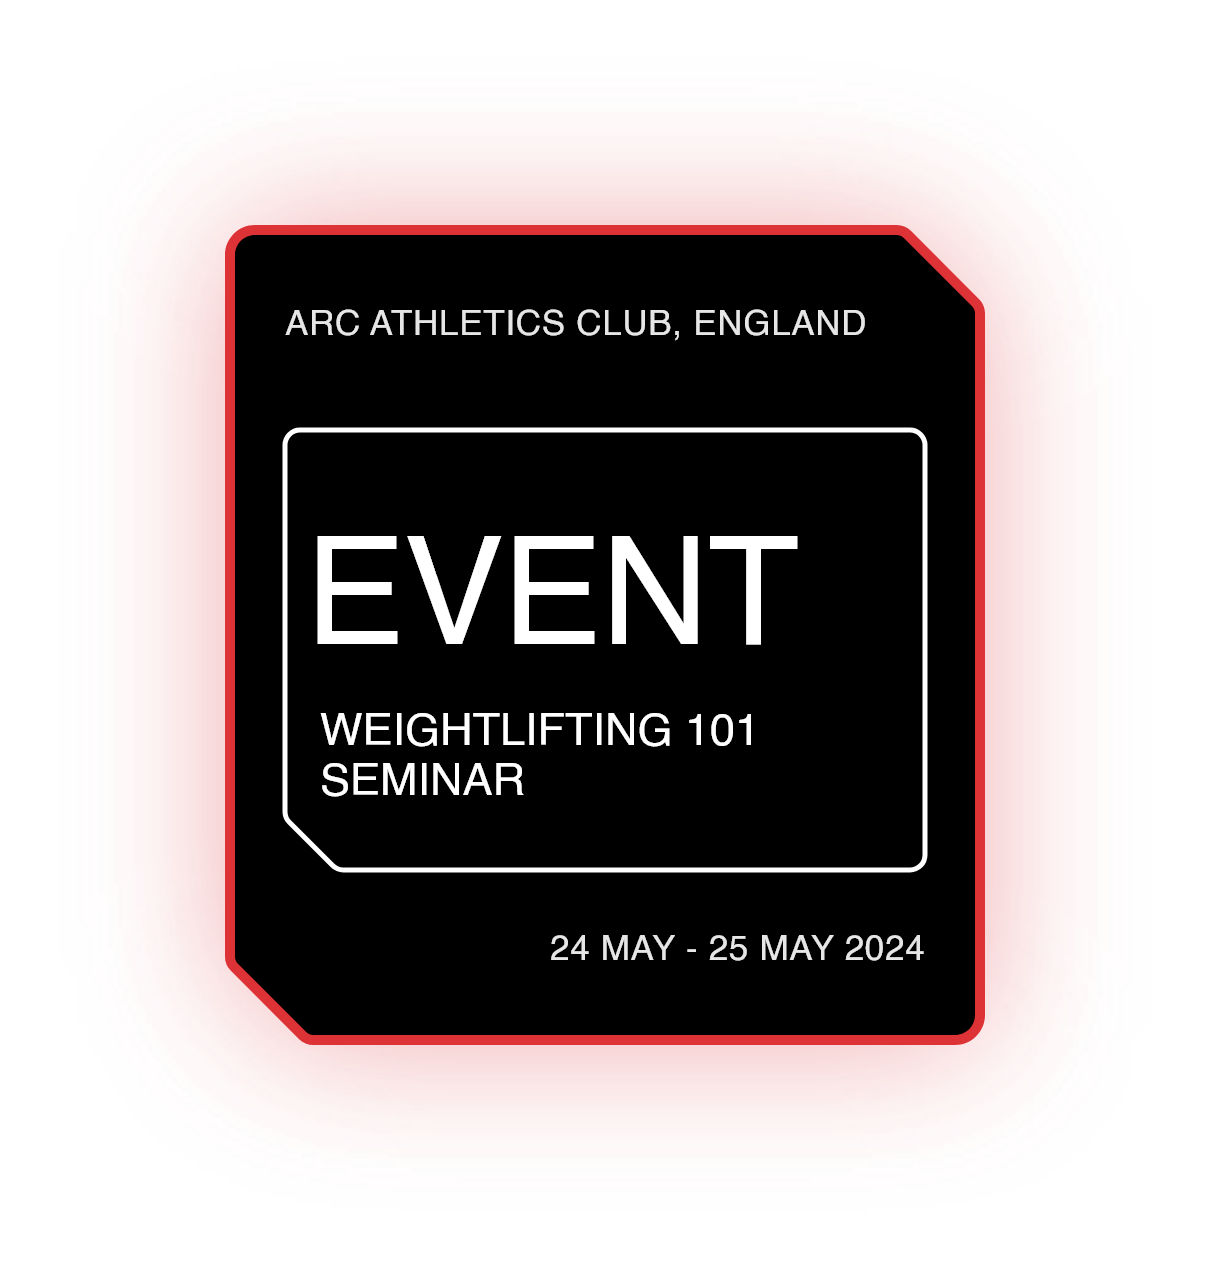 Weightlifting 101 Seminar - London, England